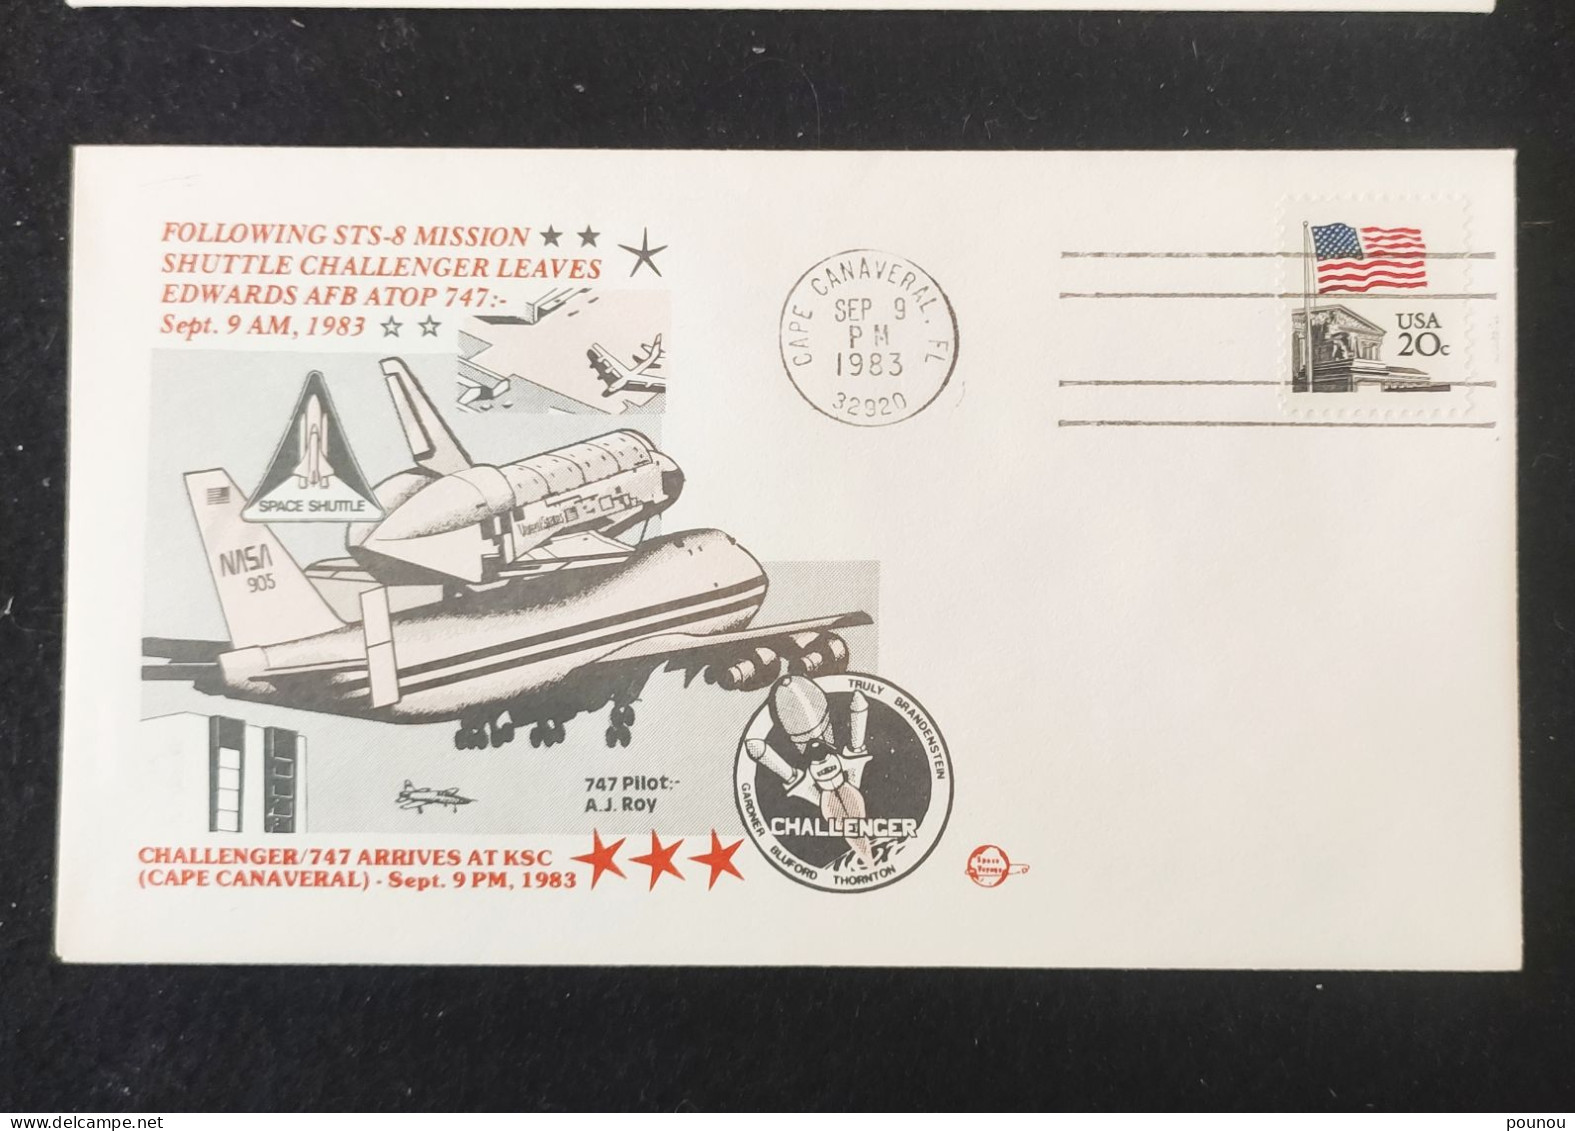 * US - STS-8 - CHALLENGER ARRIVES AT KSC (77) - USA